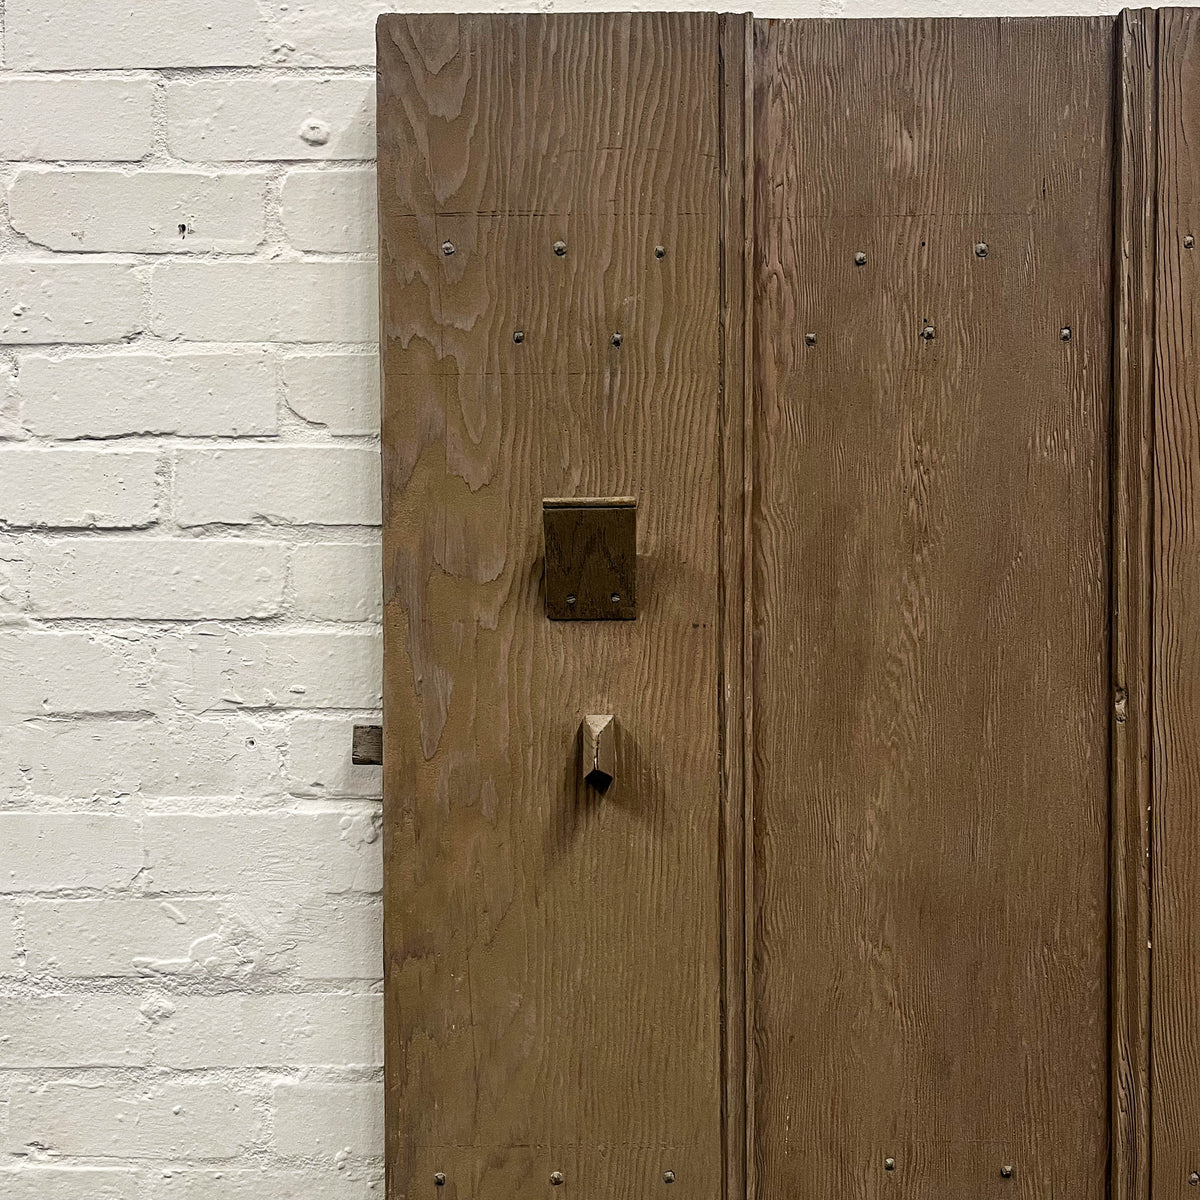 Antique Victorian Pine Latch Door - 190cm x 86cm | The Architectural Forum